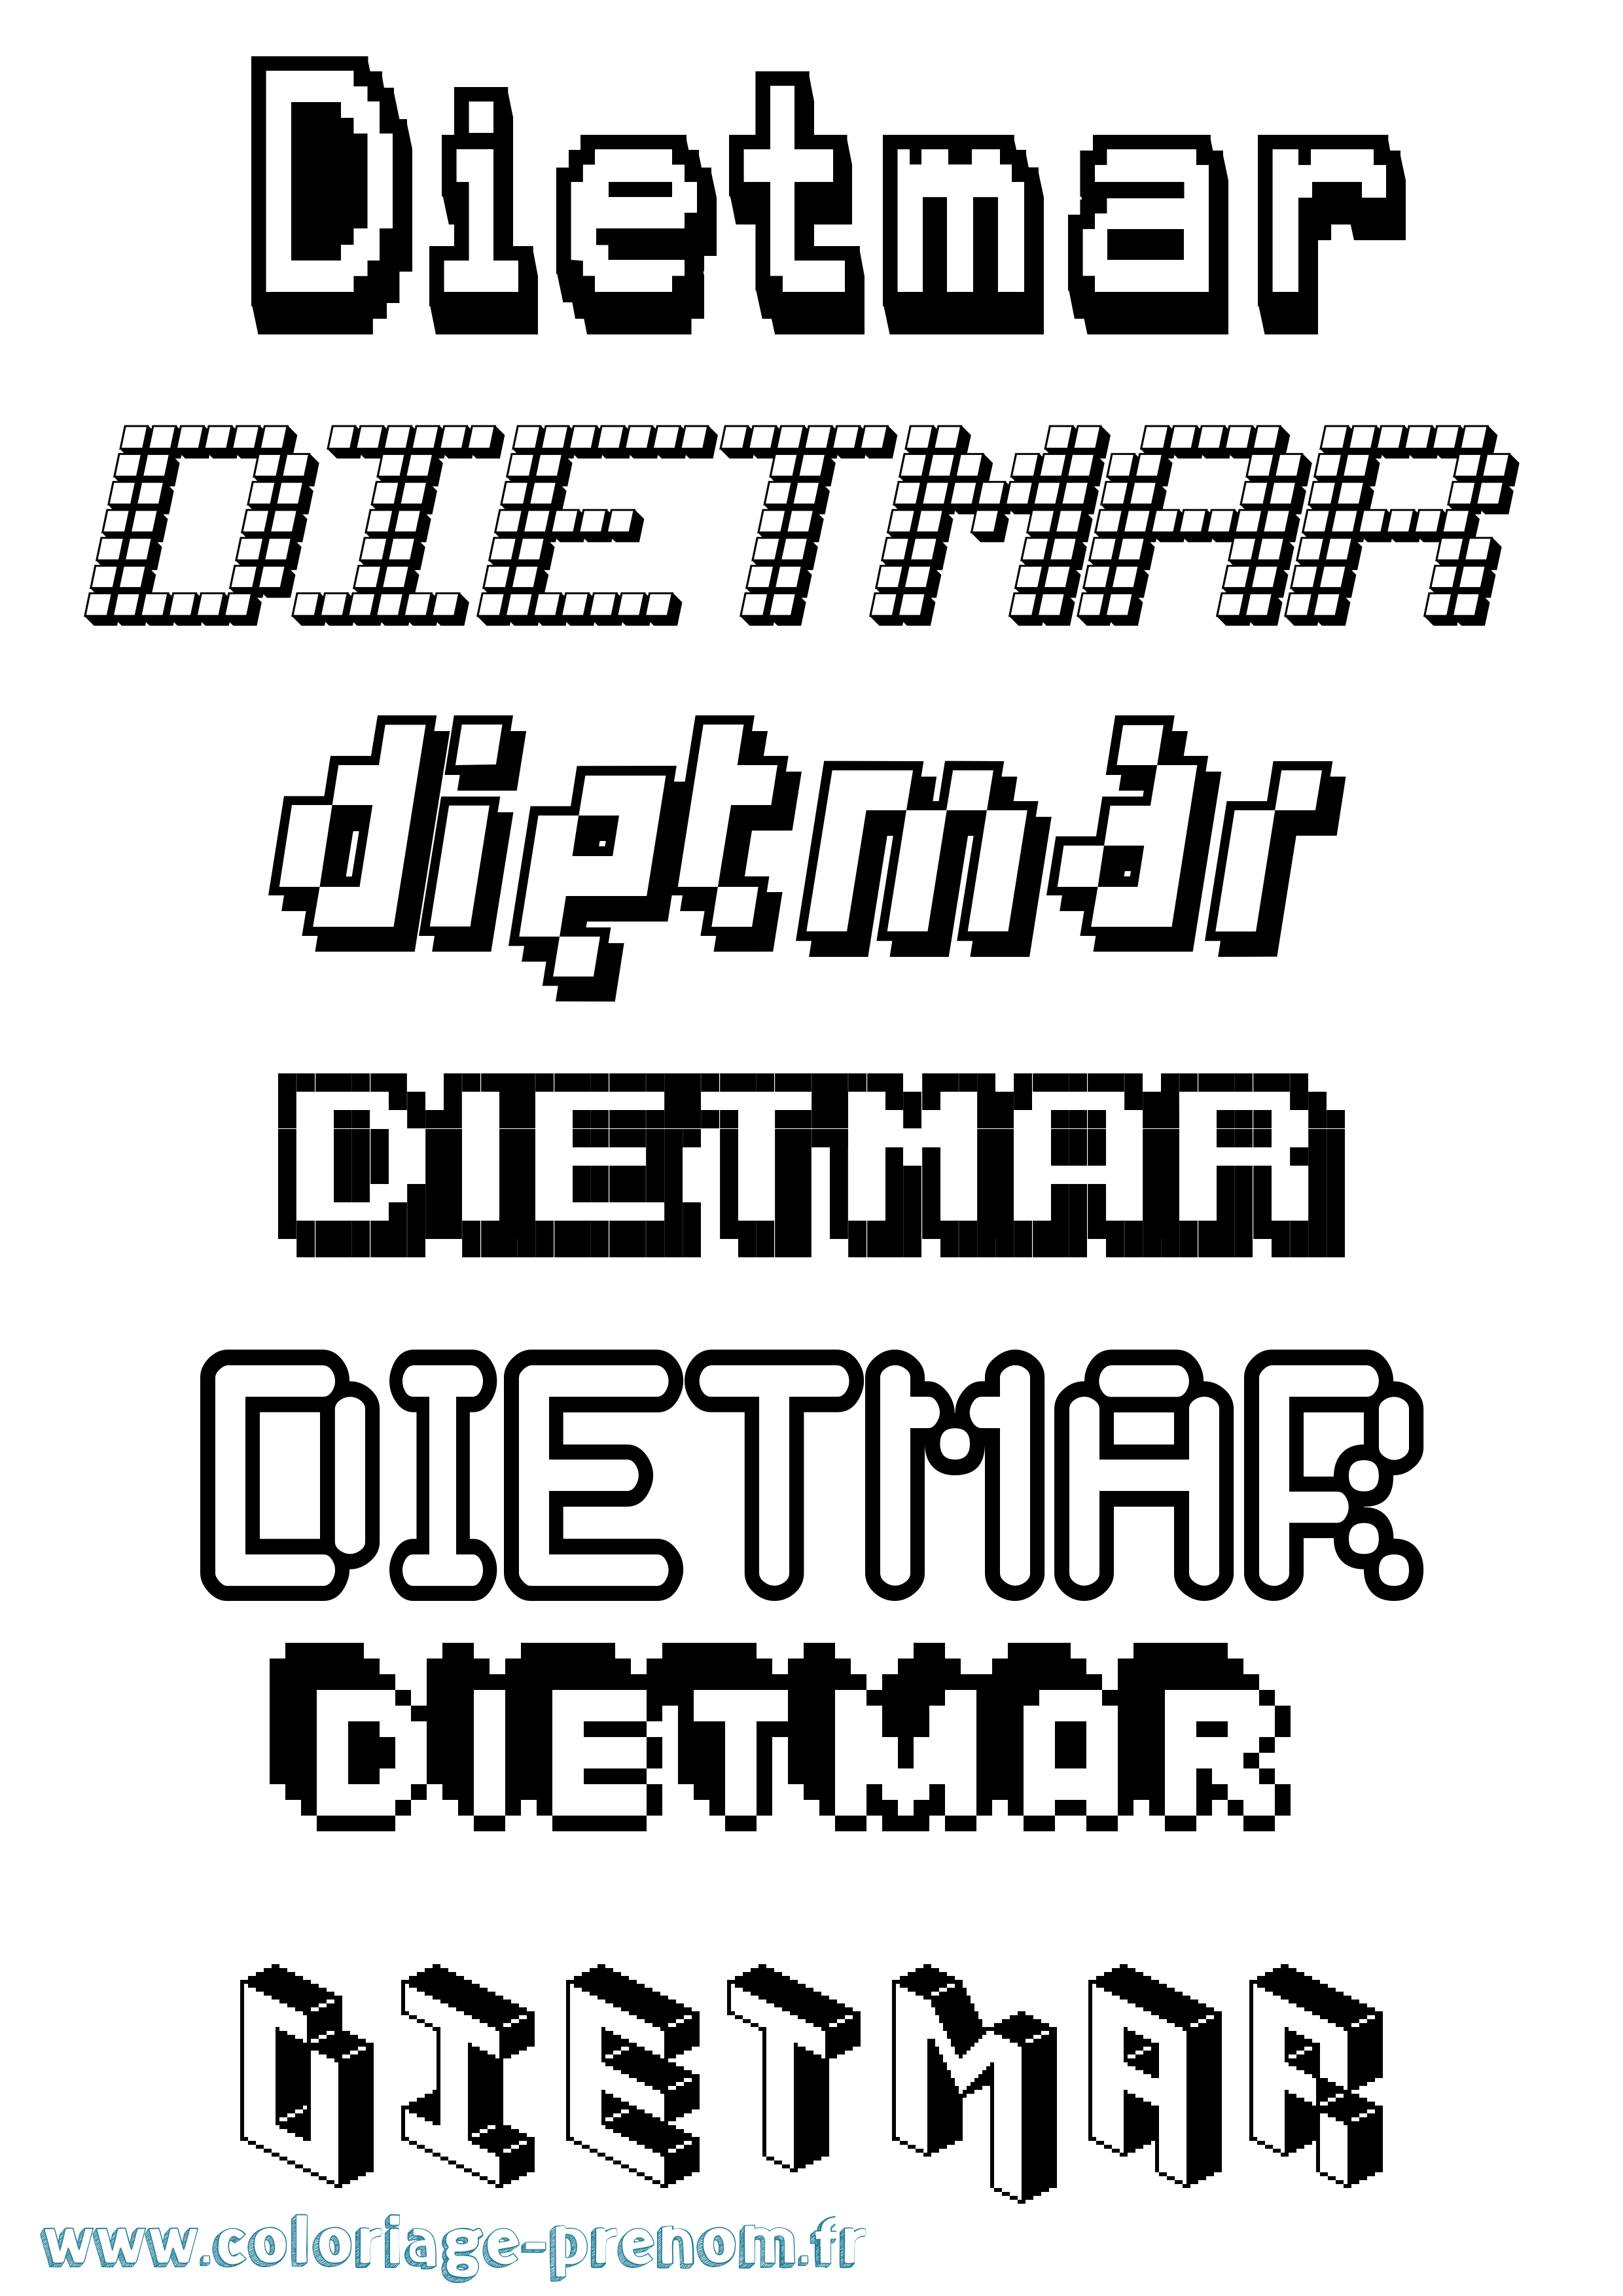 Coloriage prénom Dietmar Pixel